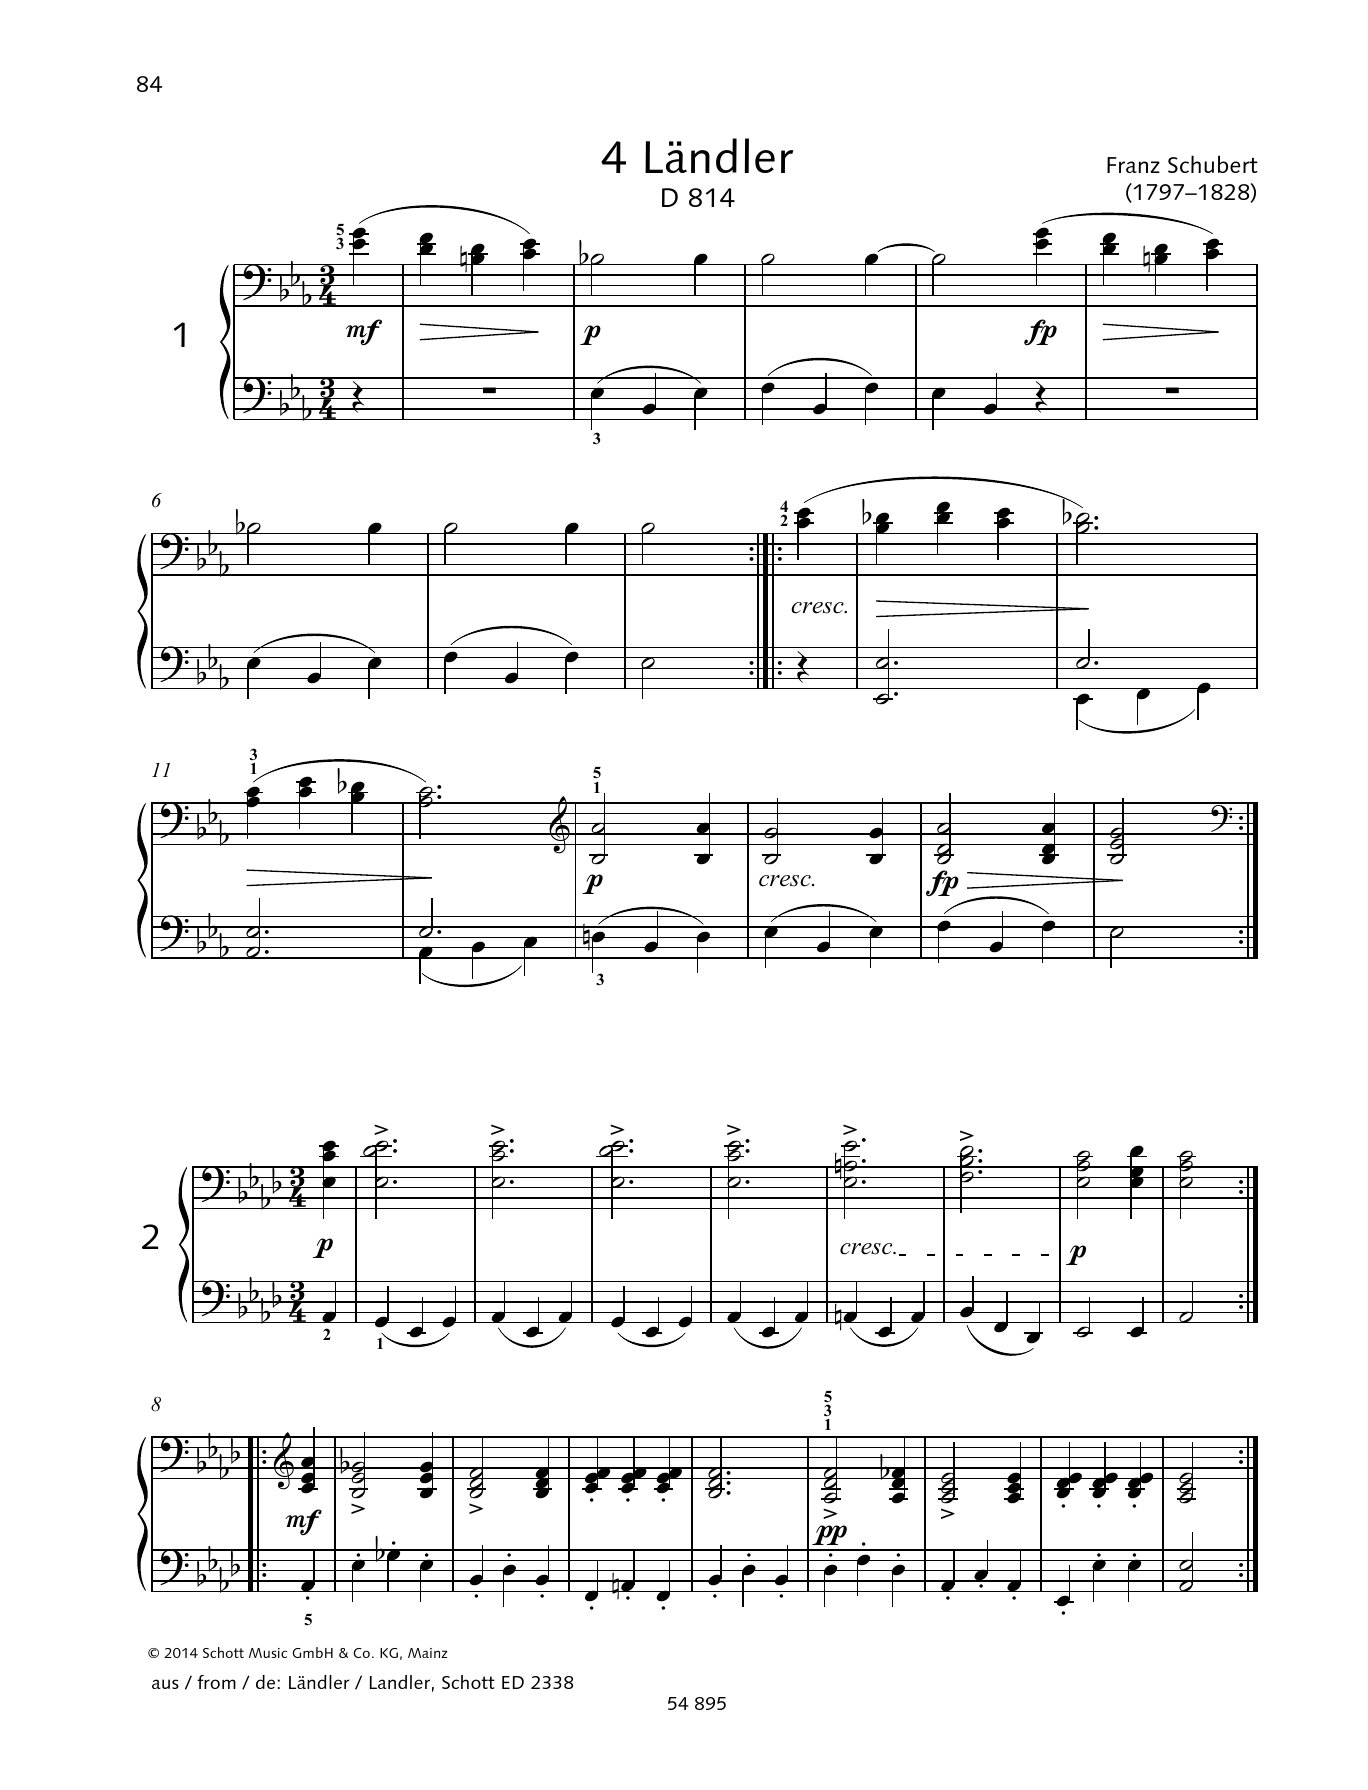 Franz Schubert 4 Landler Sheet Music Notes & Chords for Piano Duet - Download or Print PDF